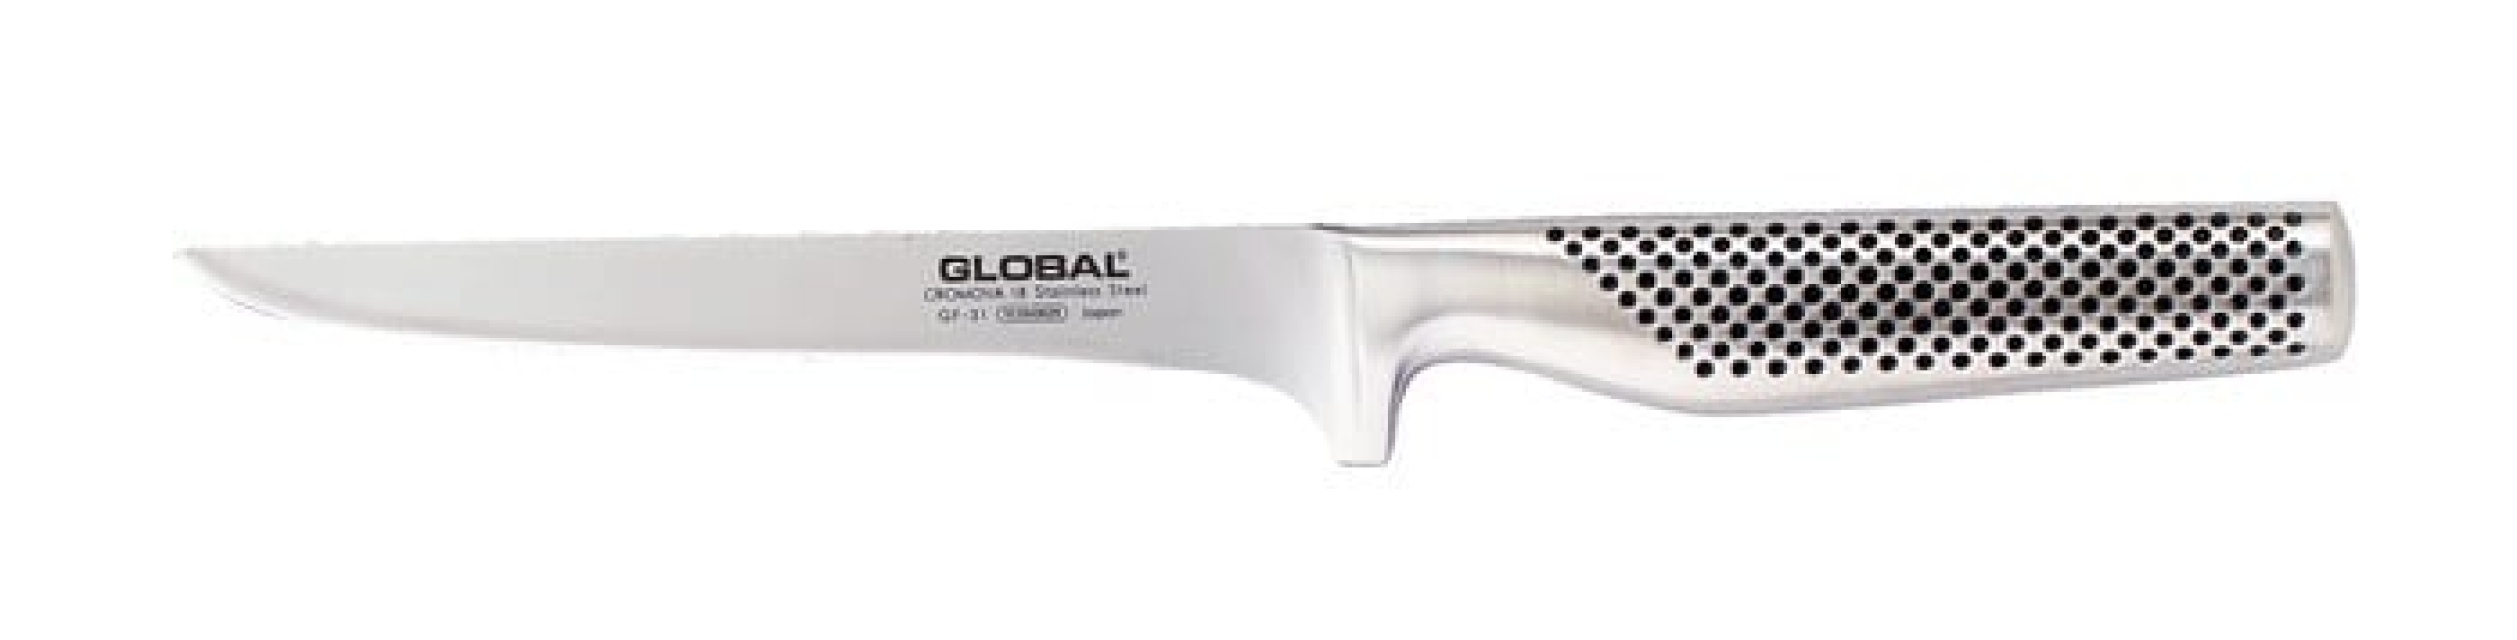 Global GF-31 Urbeningskniv 16cm